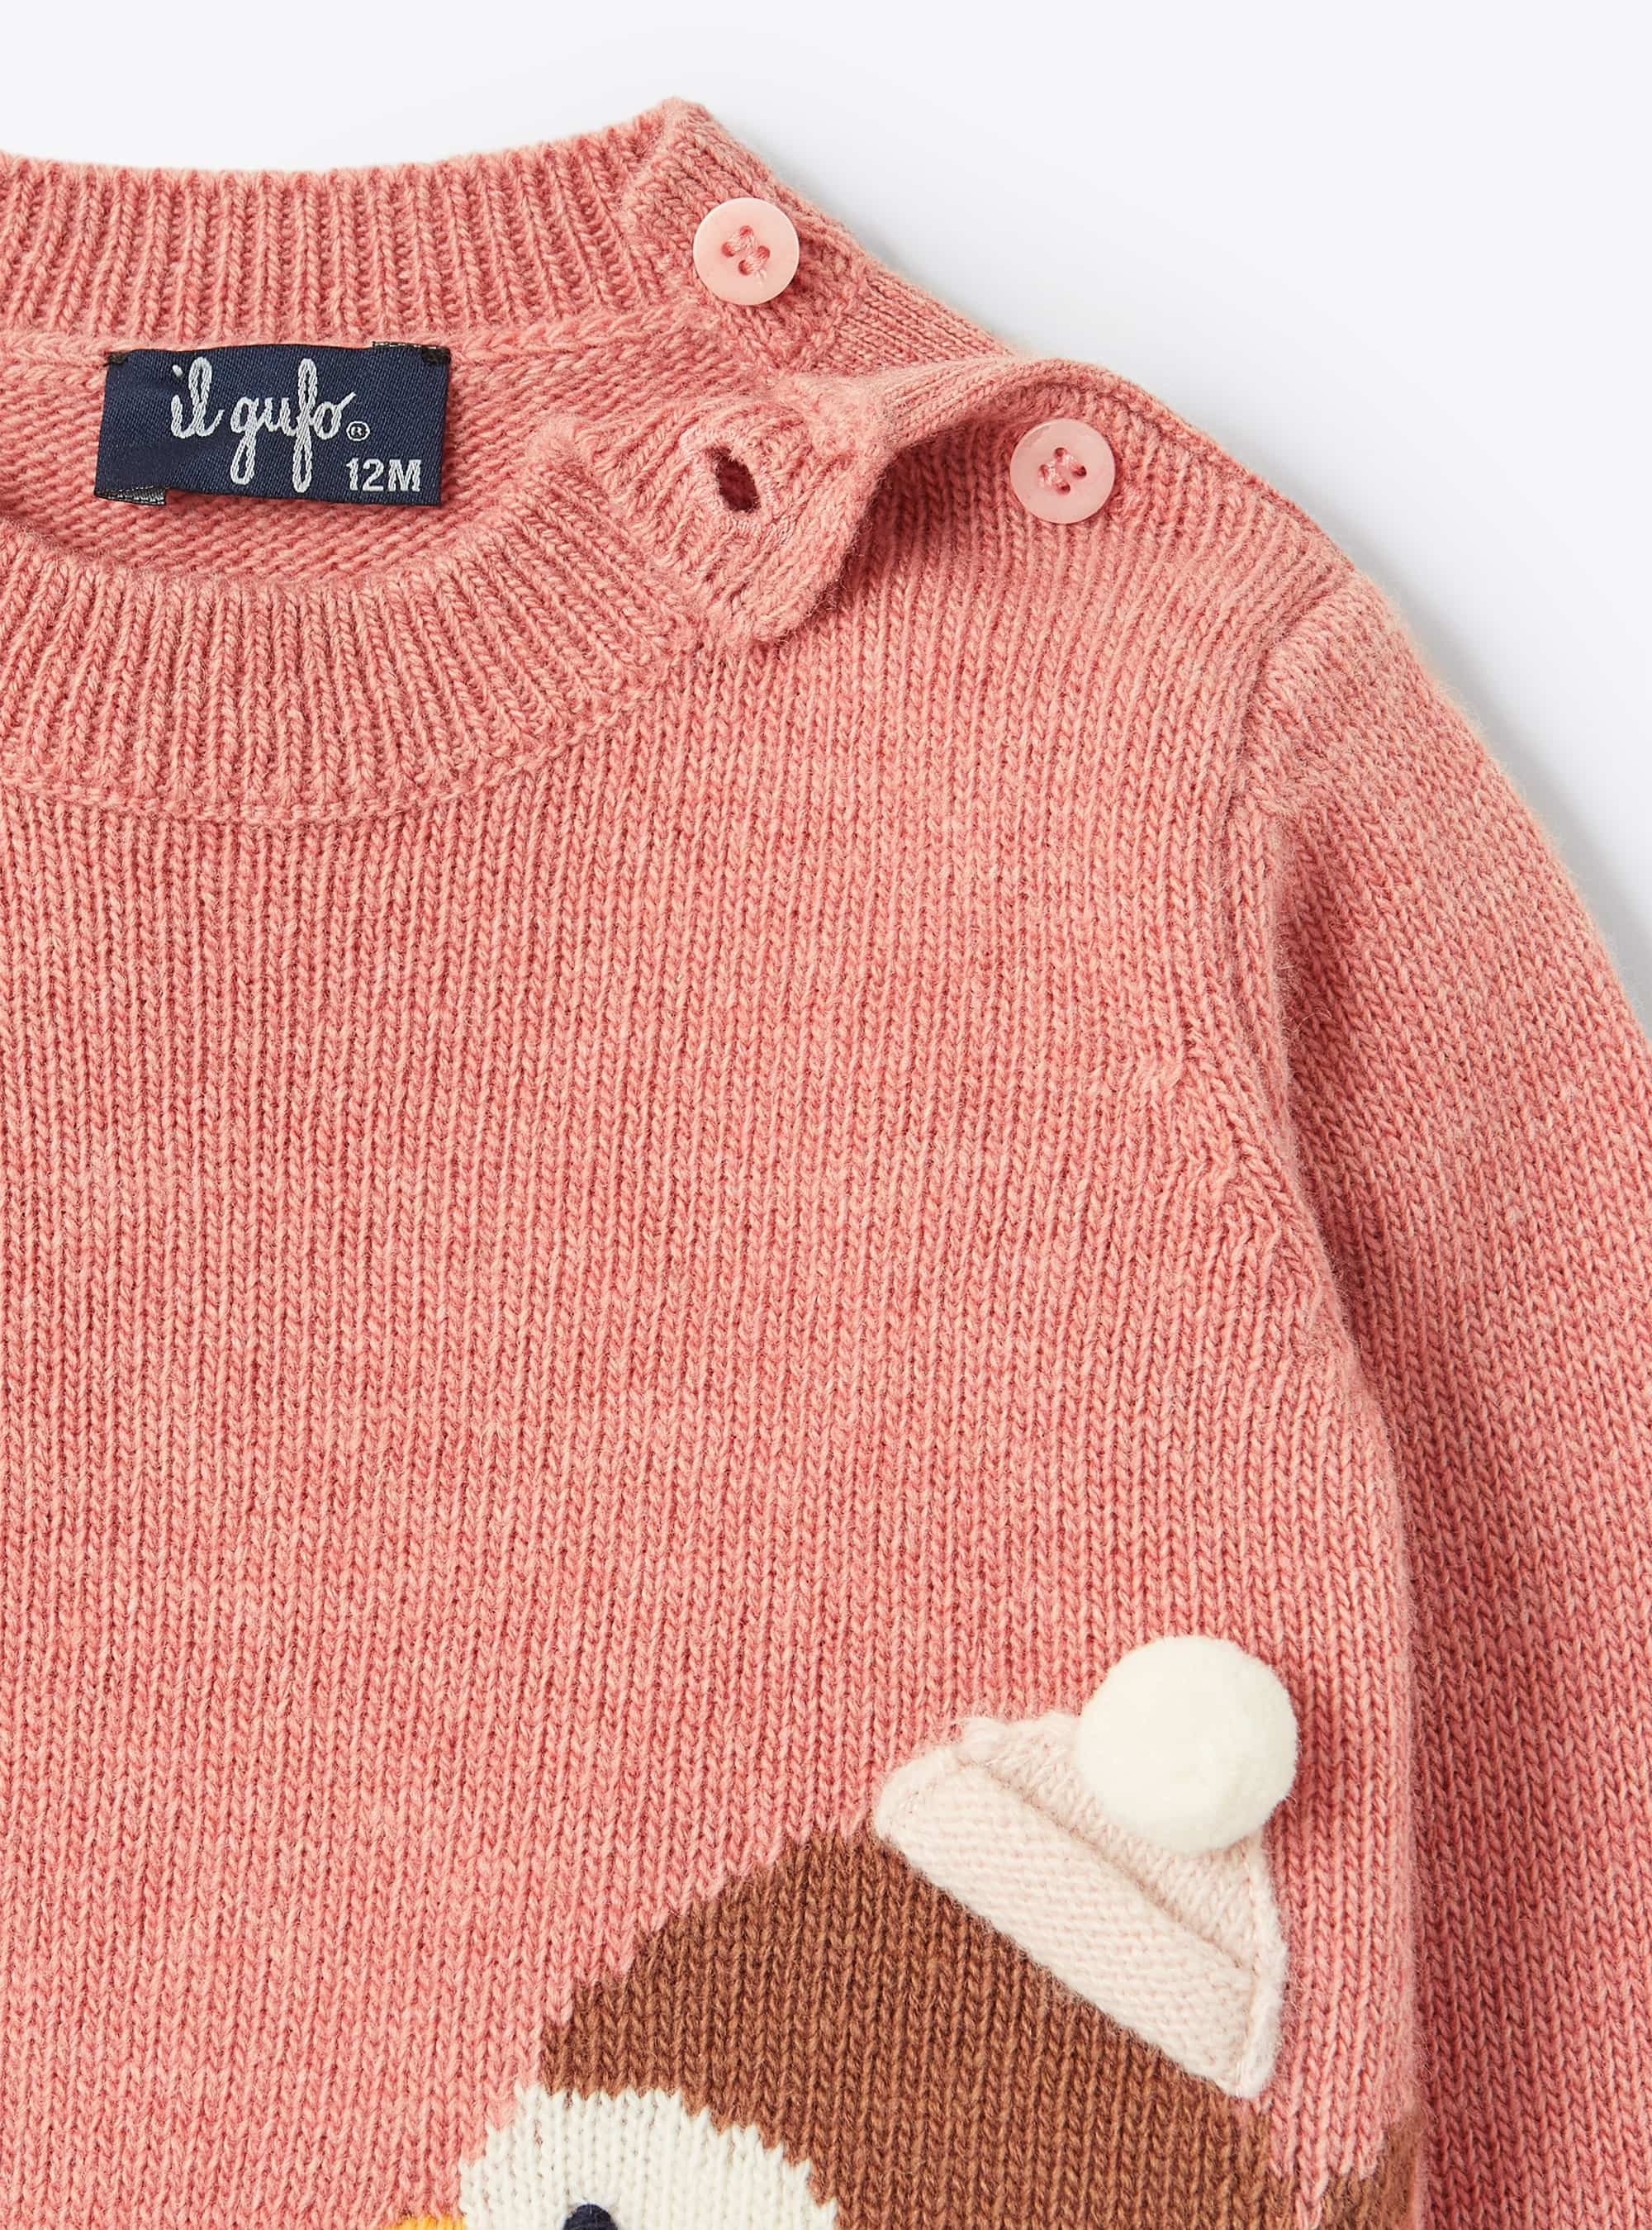 Christmas robin wool sweater - Pink | Il Gufo